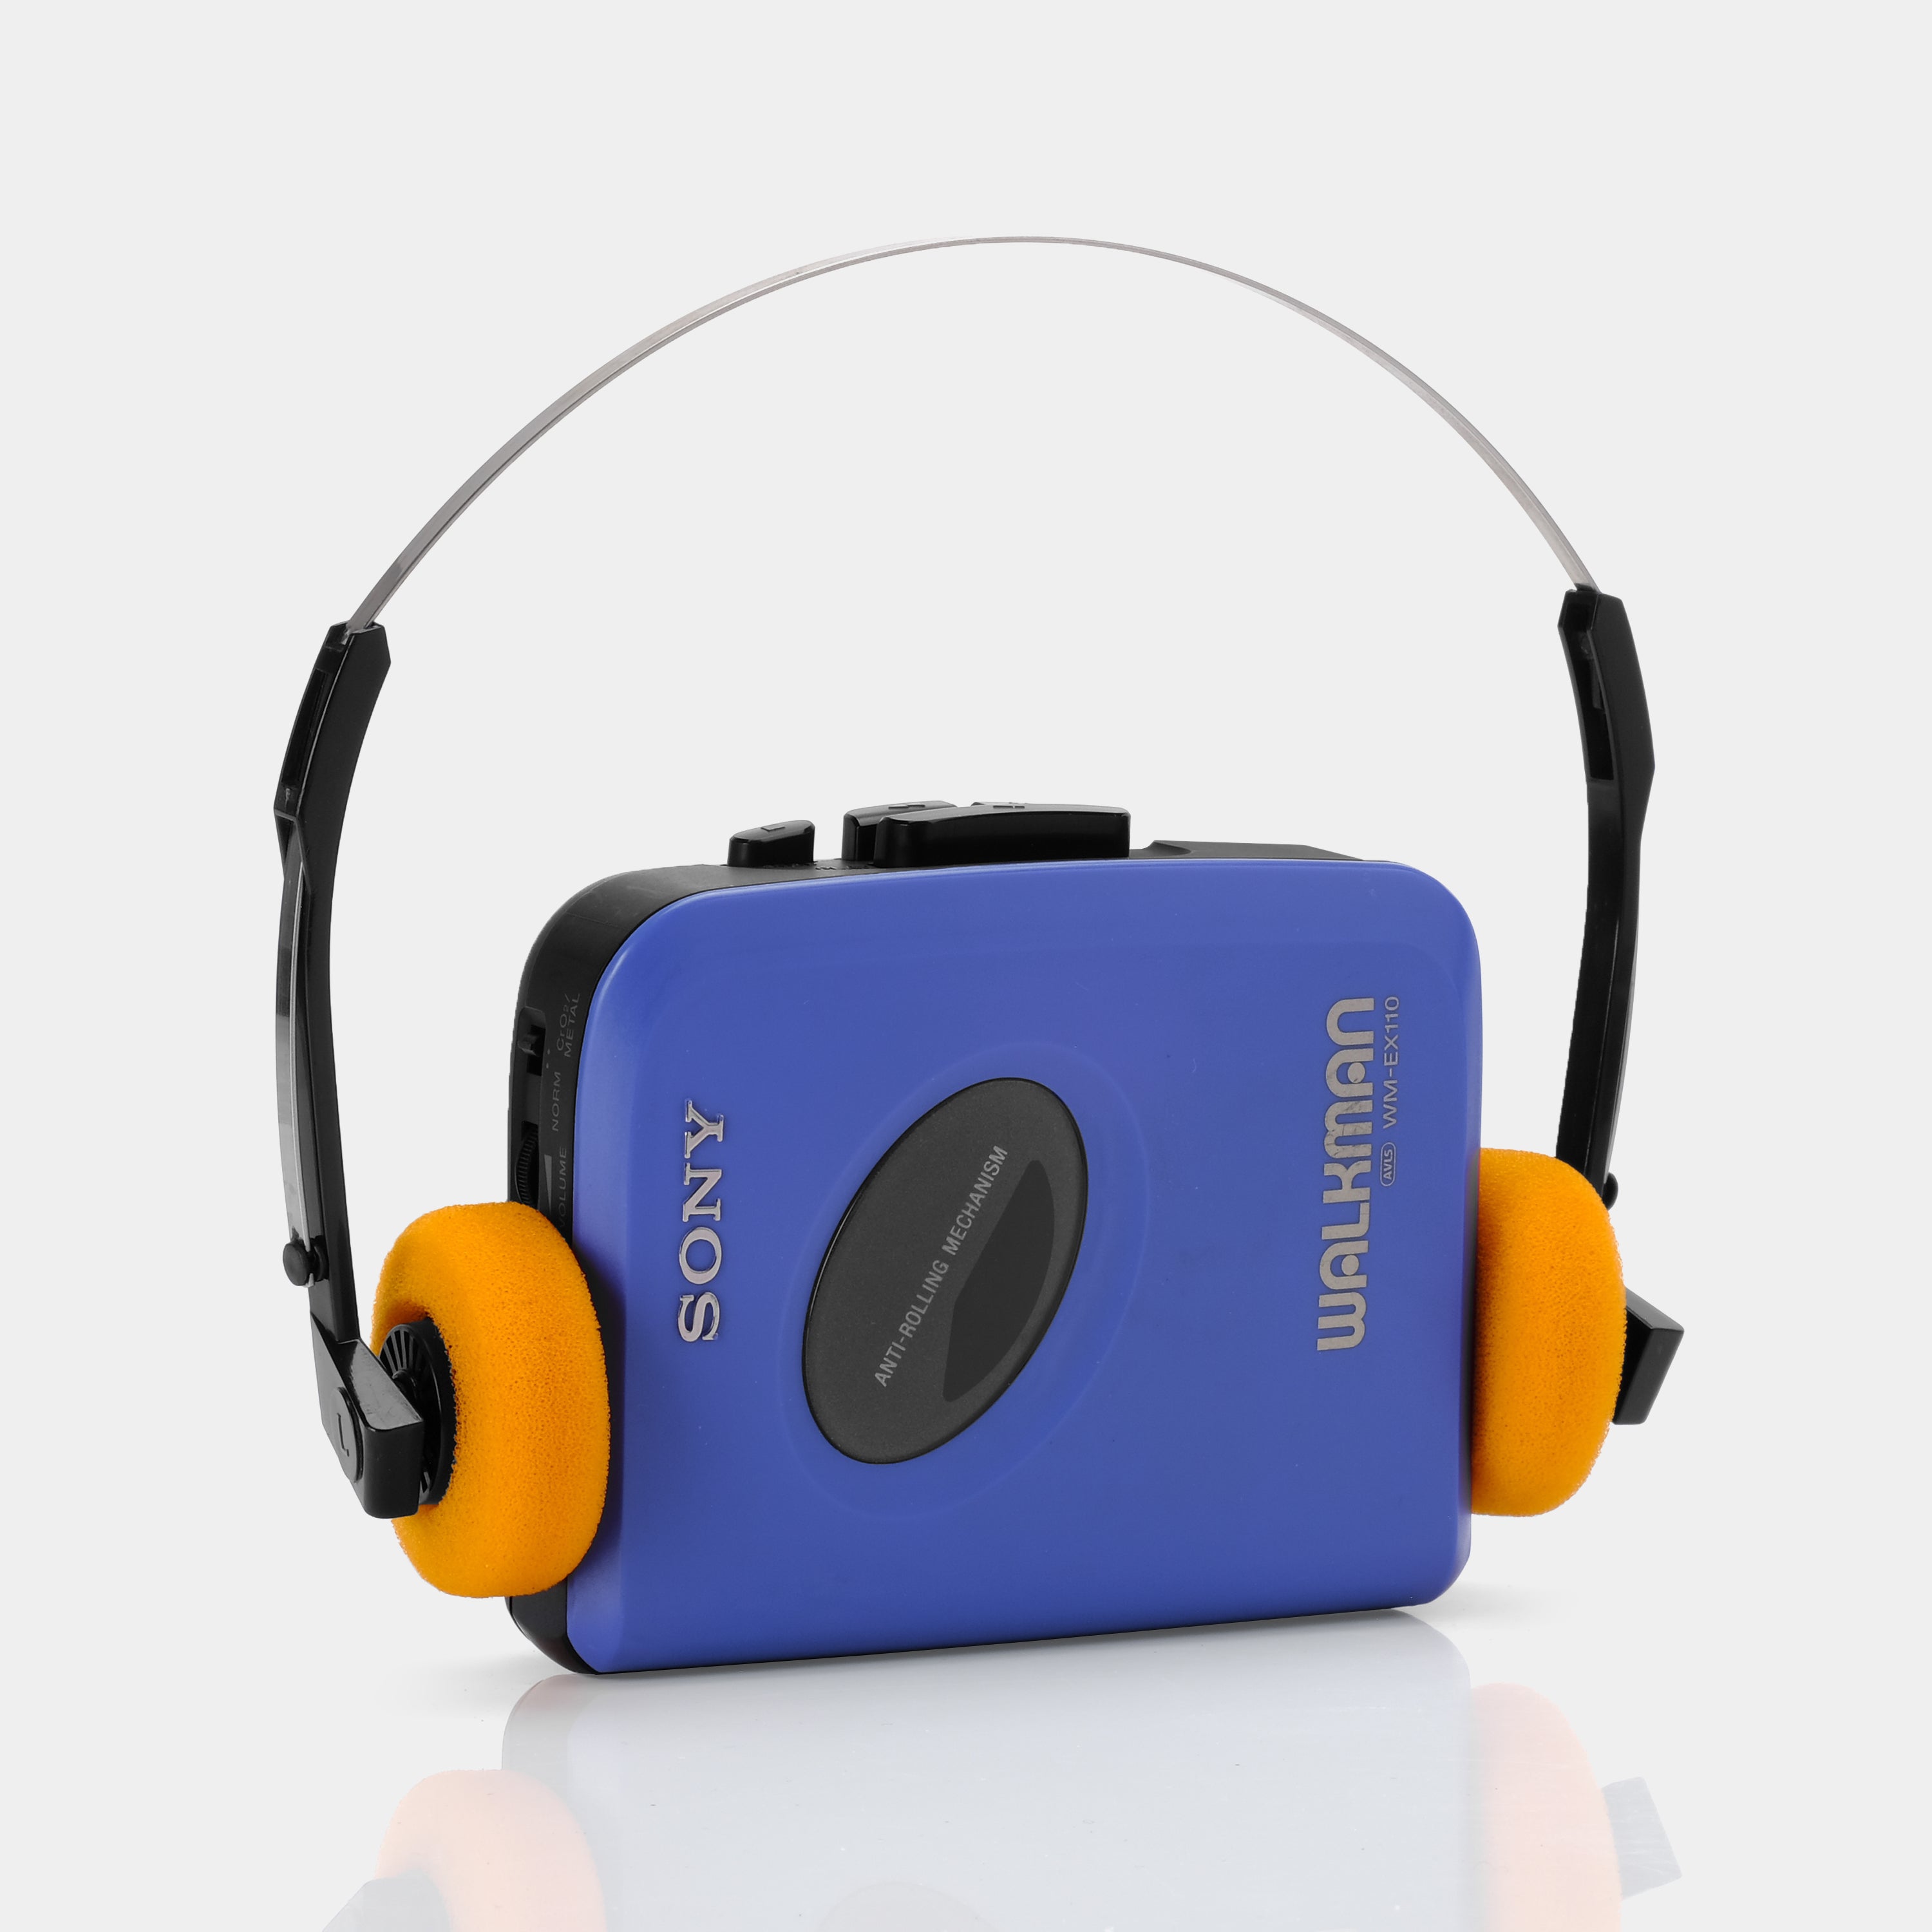 Sony Walkman WM-EX110 Blue Portable Cassette Player